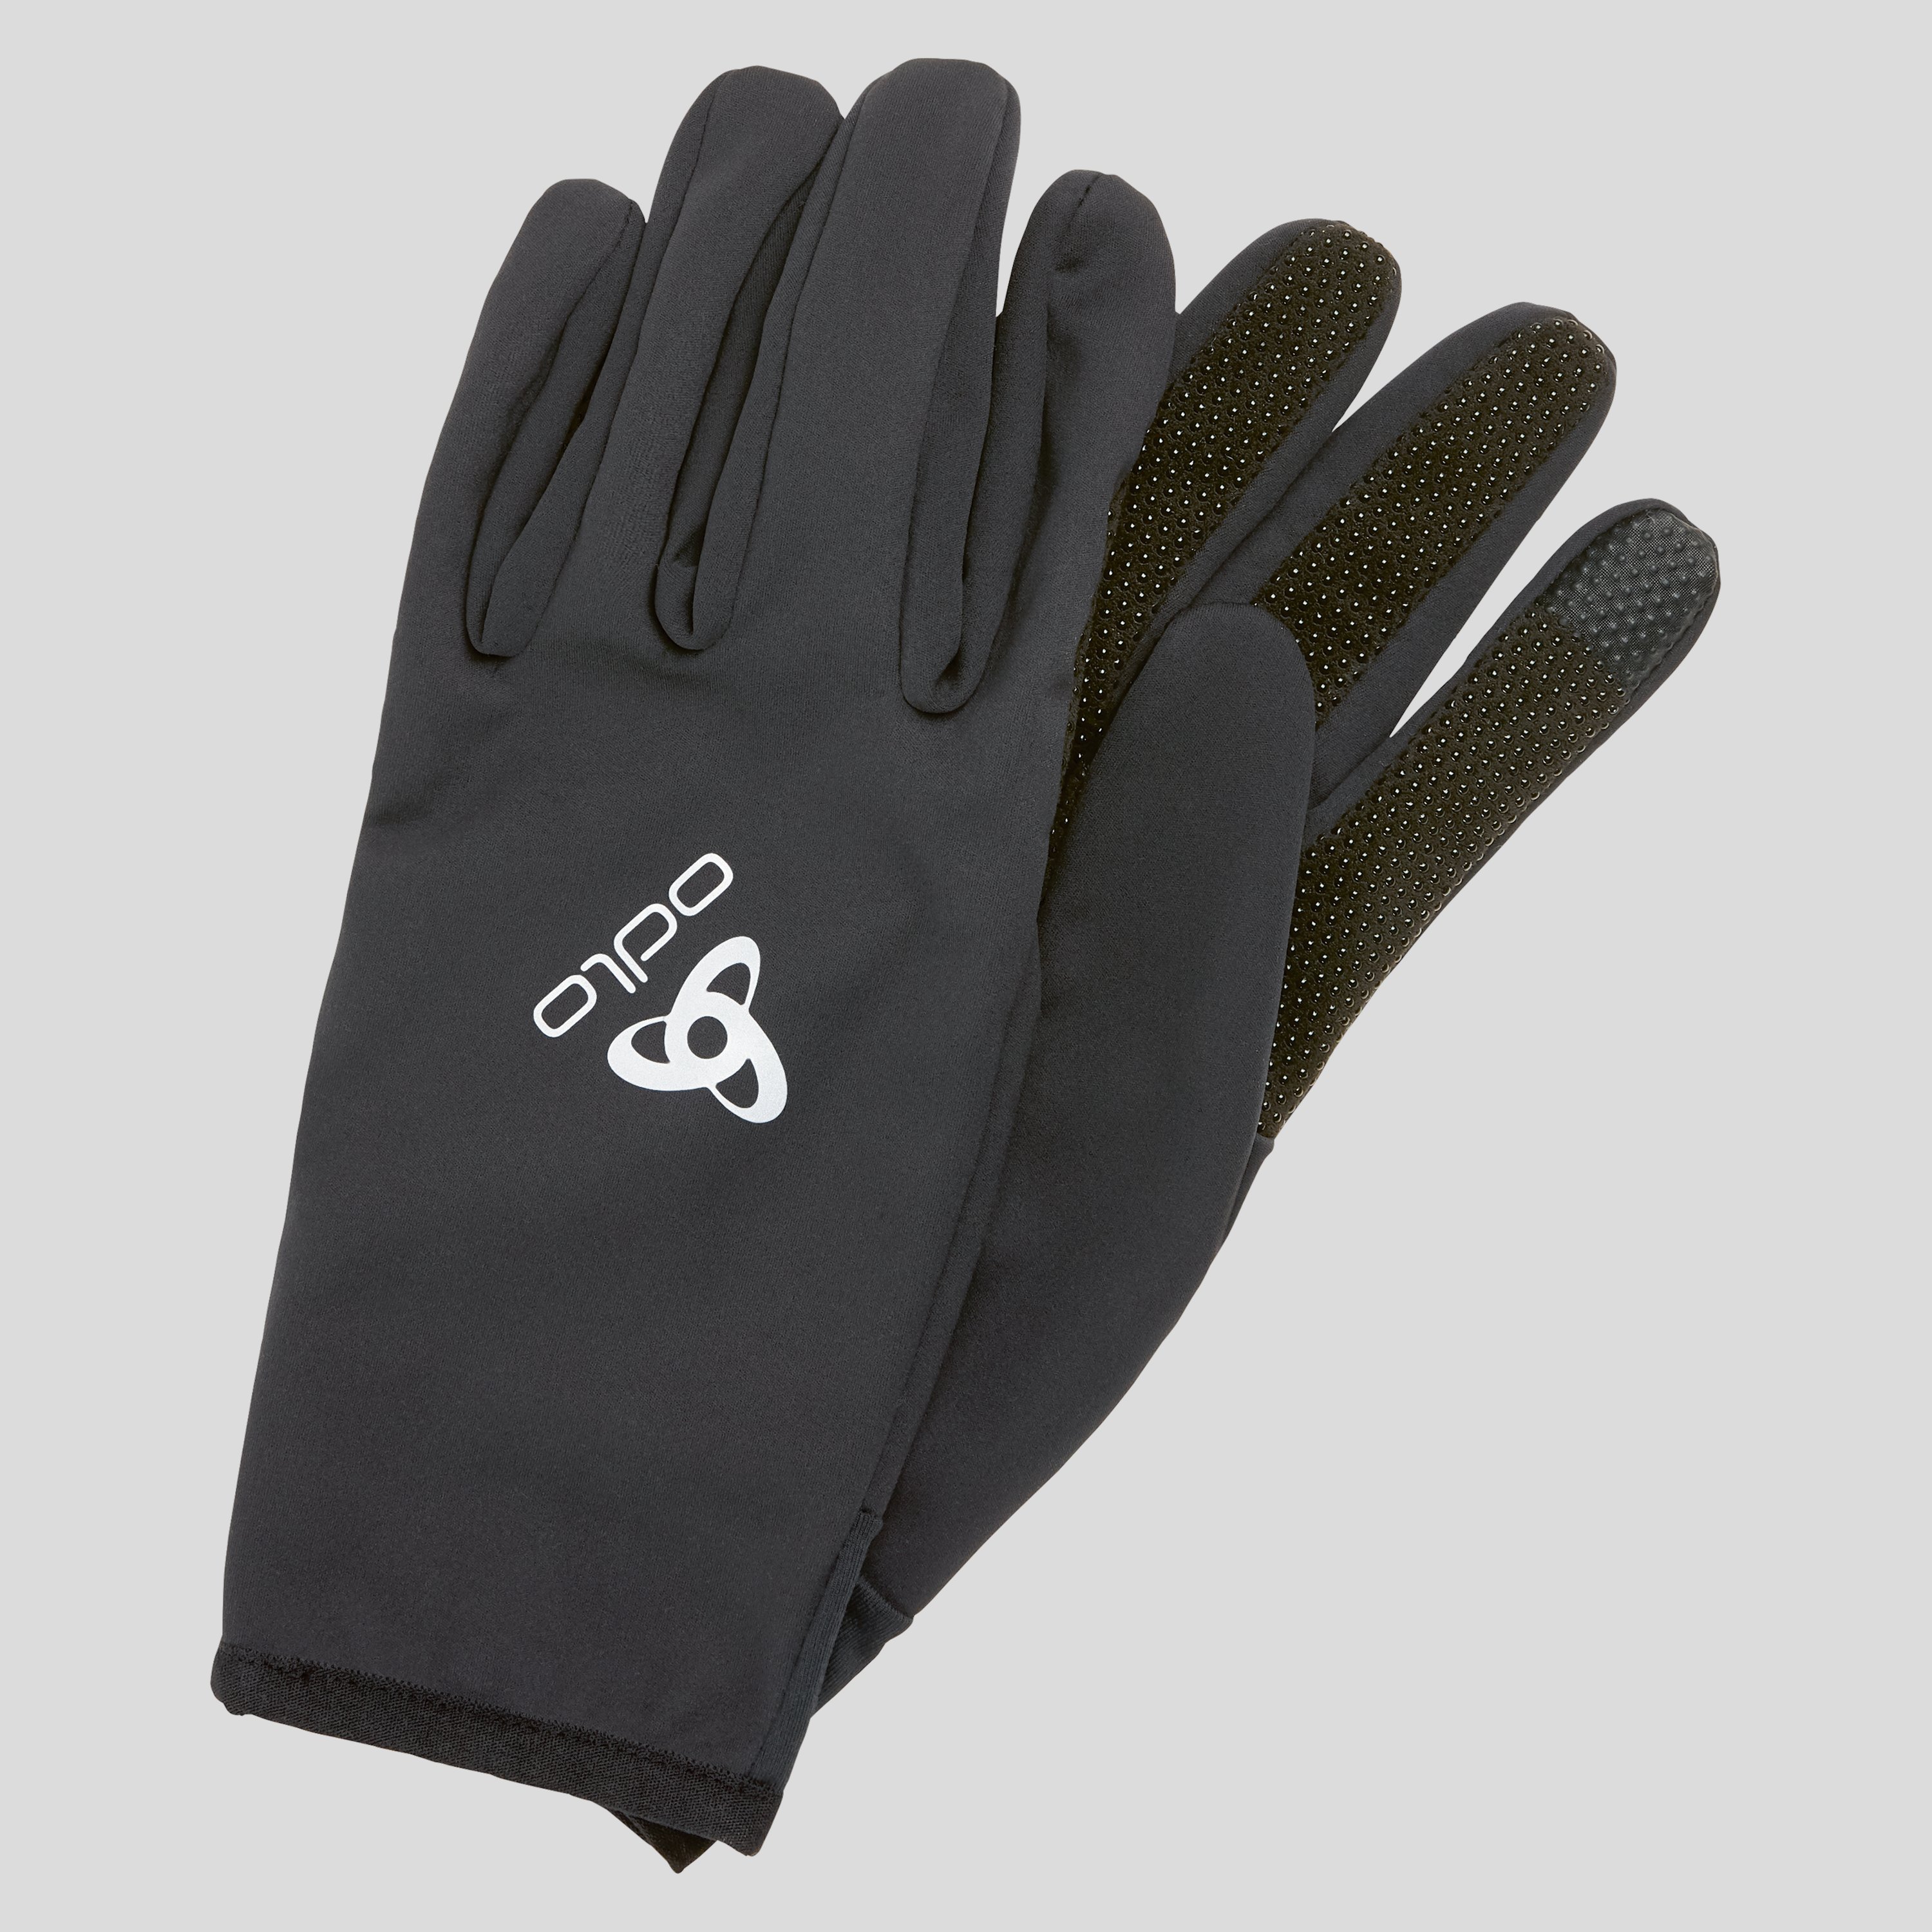 ODLO Ceramiwarm Grip Handschuhe, S, schwarz